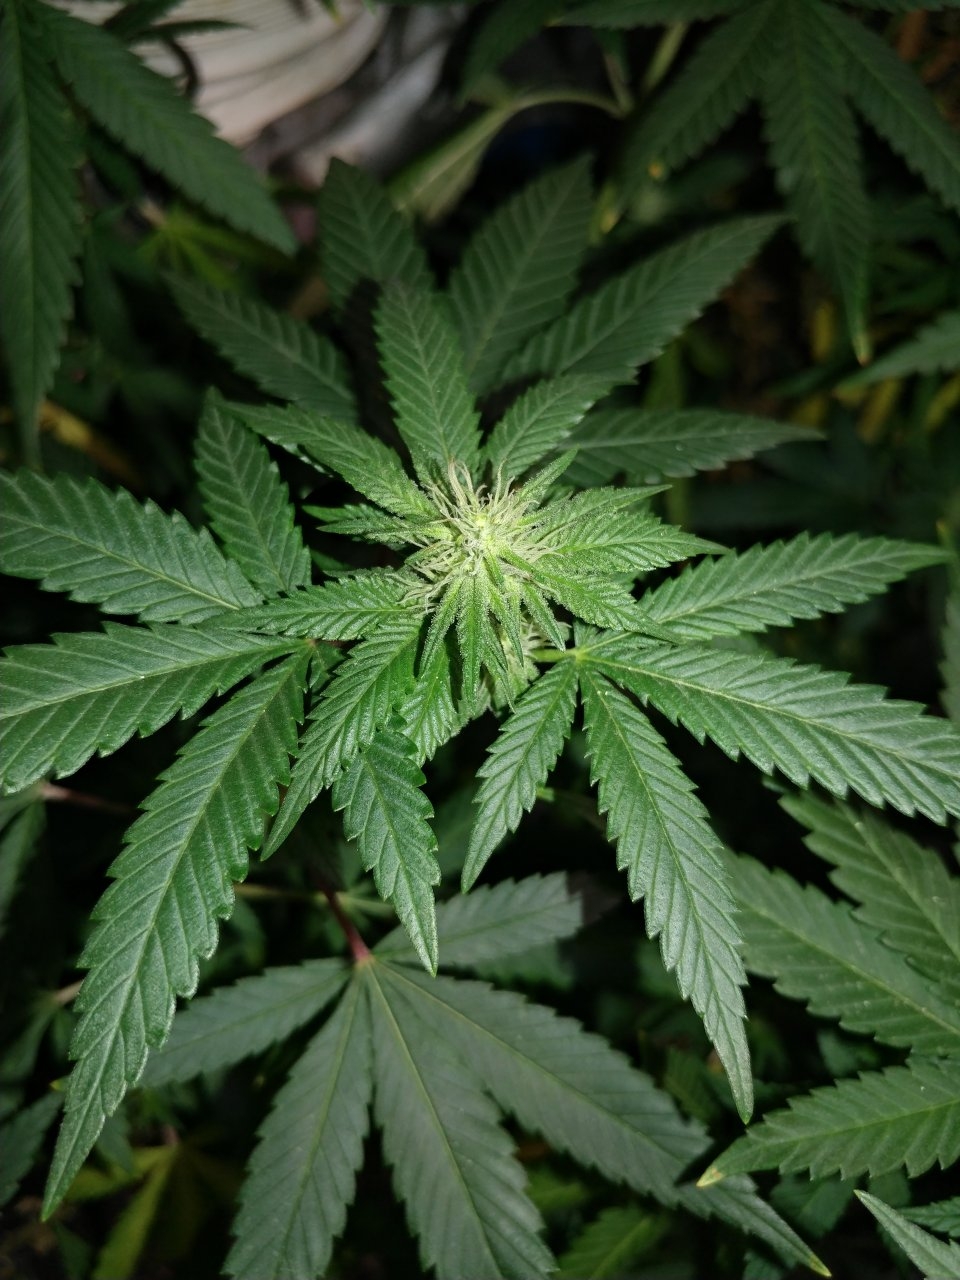 2018 Icemud Pine Tar Kush 79 Xmas Bud indoor cannabis grow in soil